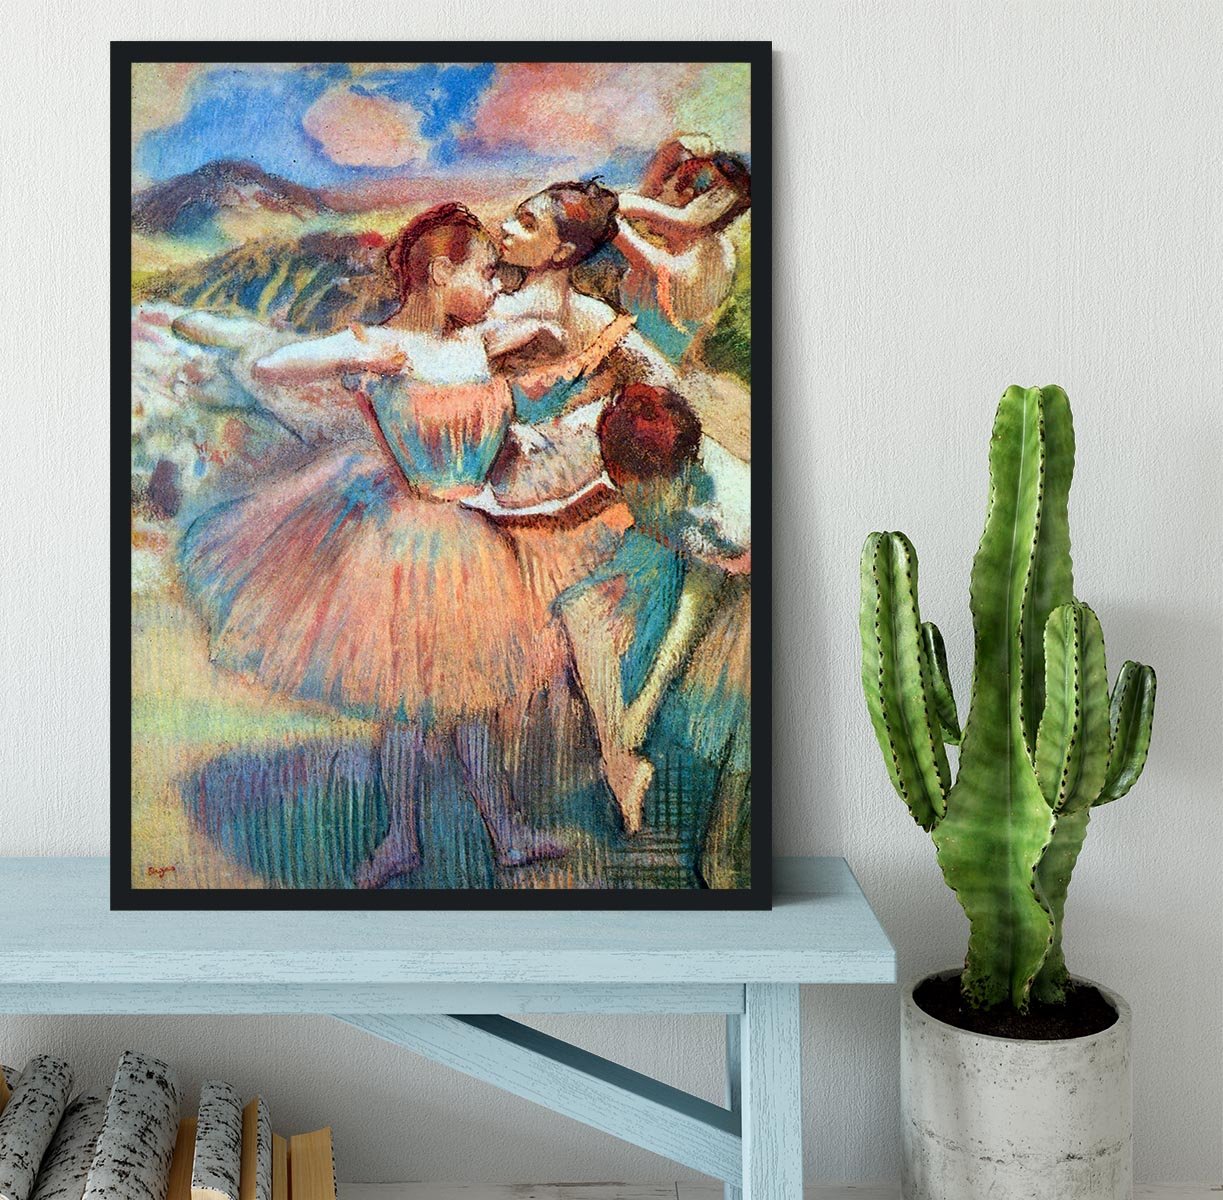 Dancers in the landscape by Degas Framed Print - Canvas Art Rocks - 2